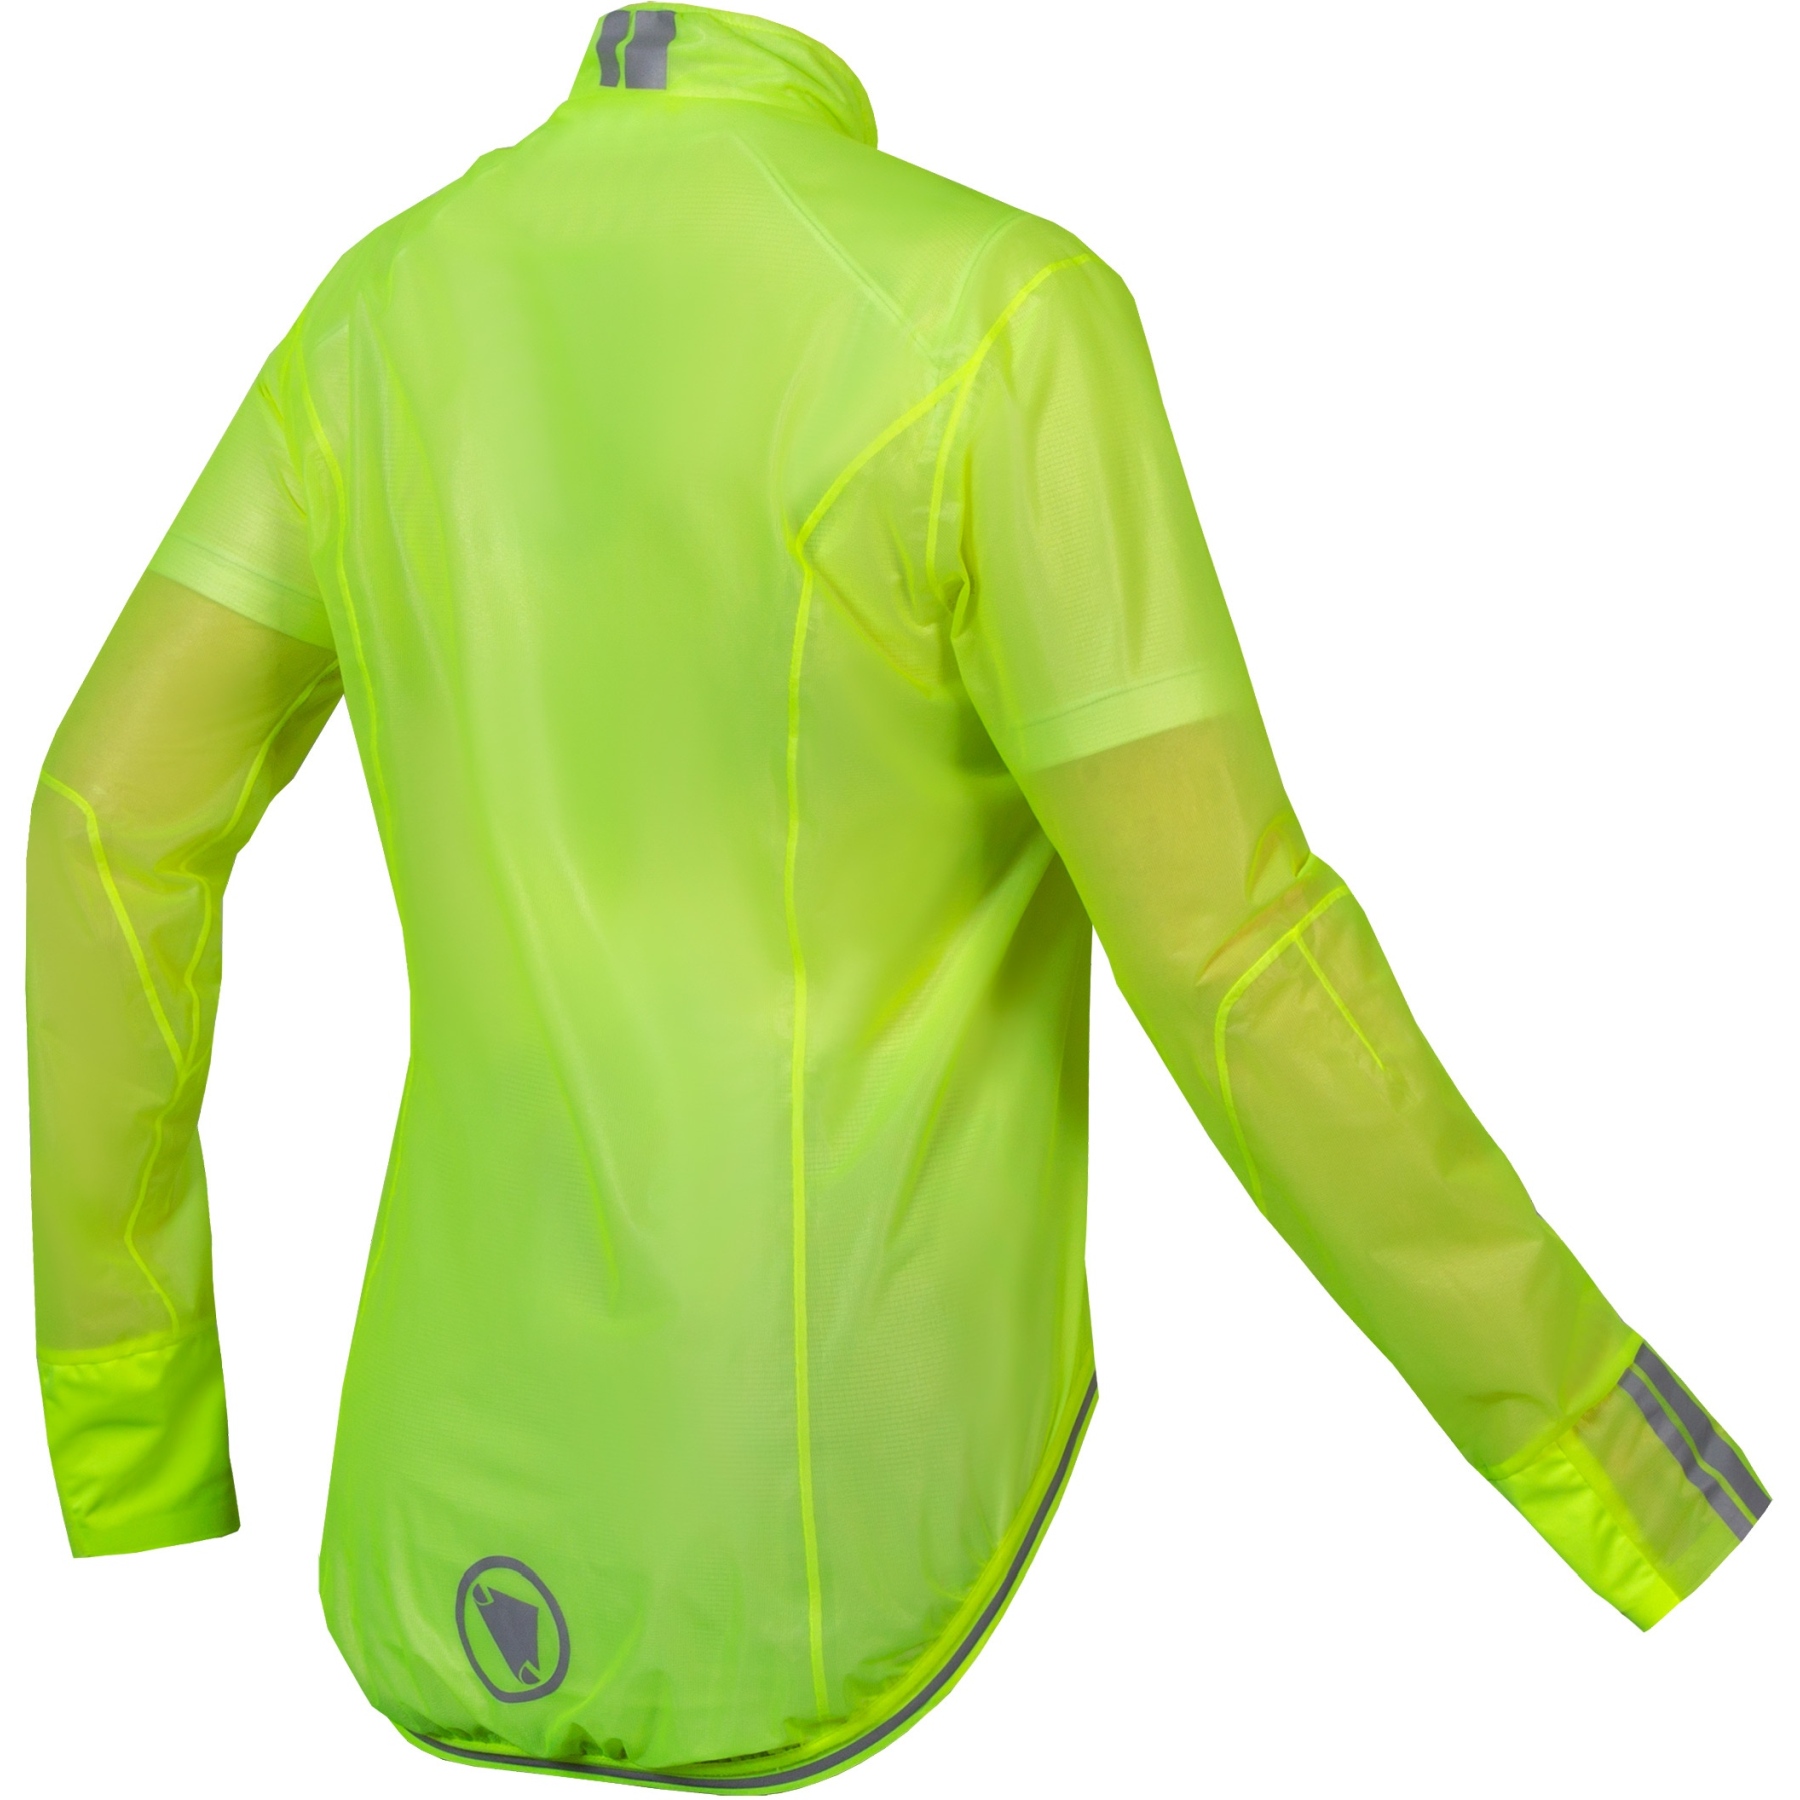 Endura FS260-Pro Adrenaline Race Cape II Jacket Women - hi-viz yellow